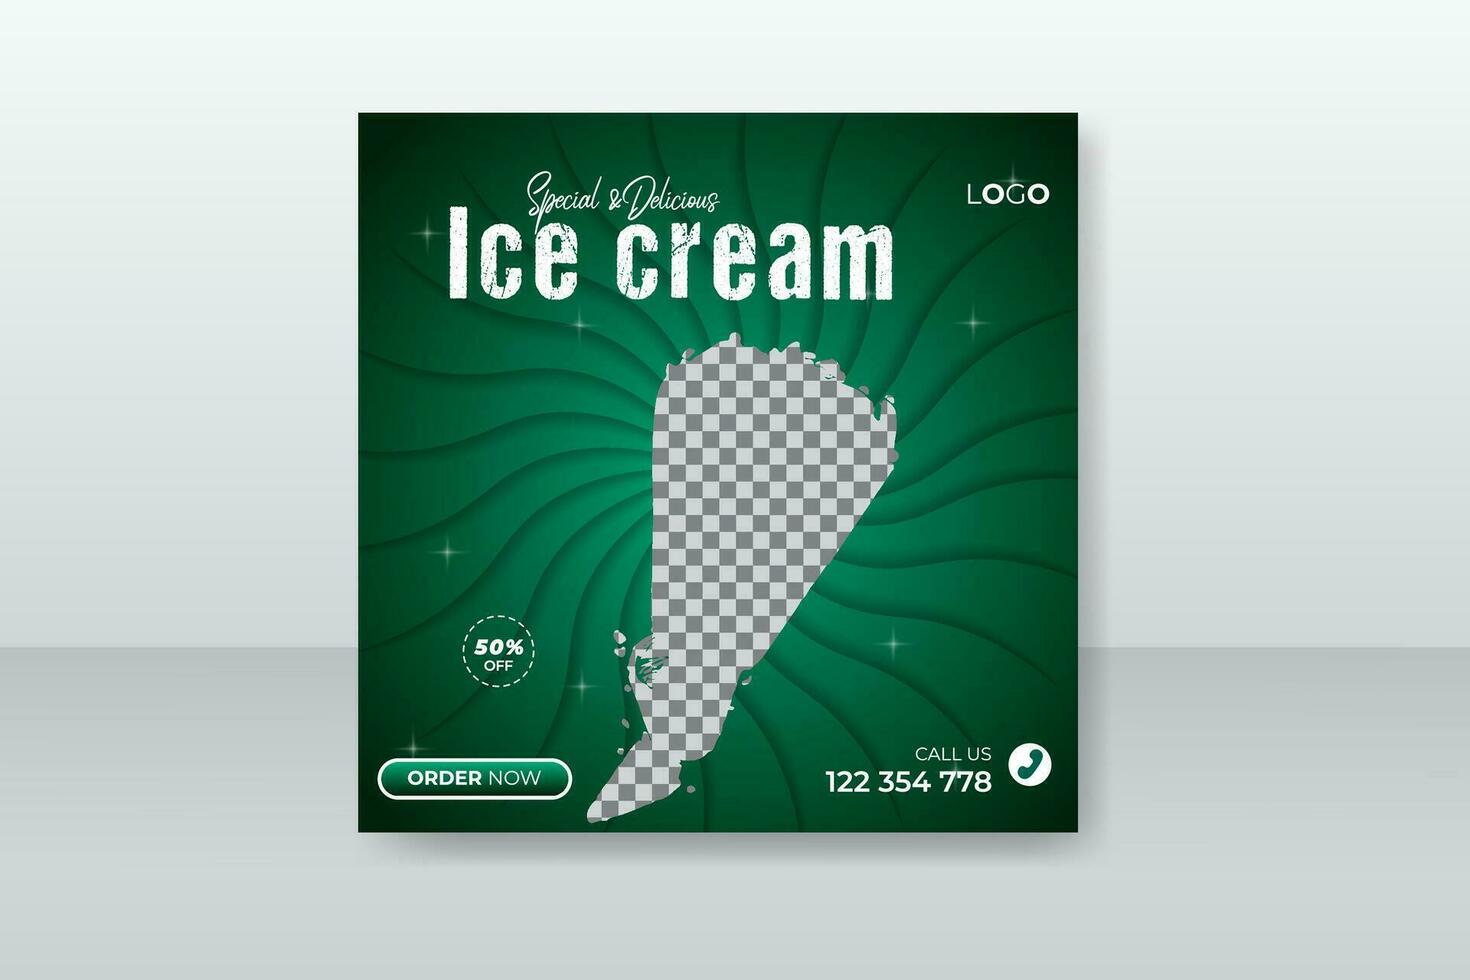 especial delicioso hielo crema social medios de comunicación enviar o promocional bandera con descuento oferta resumen vistoso forma vector